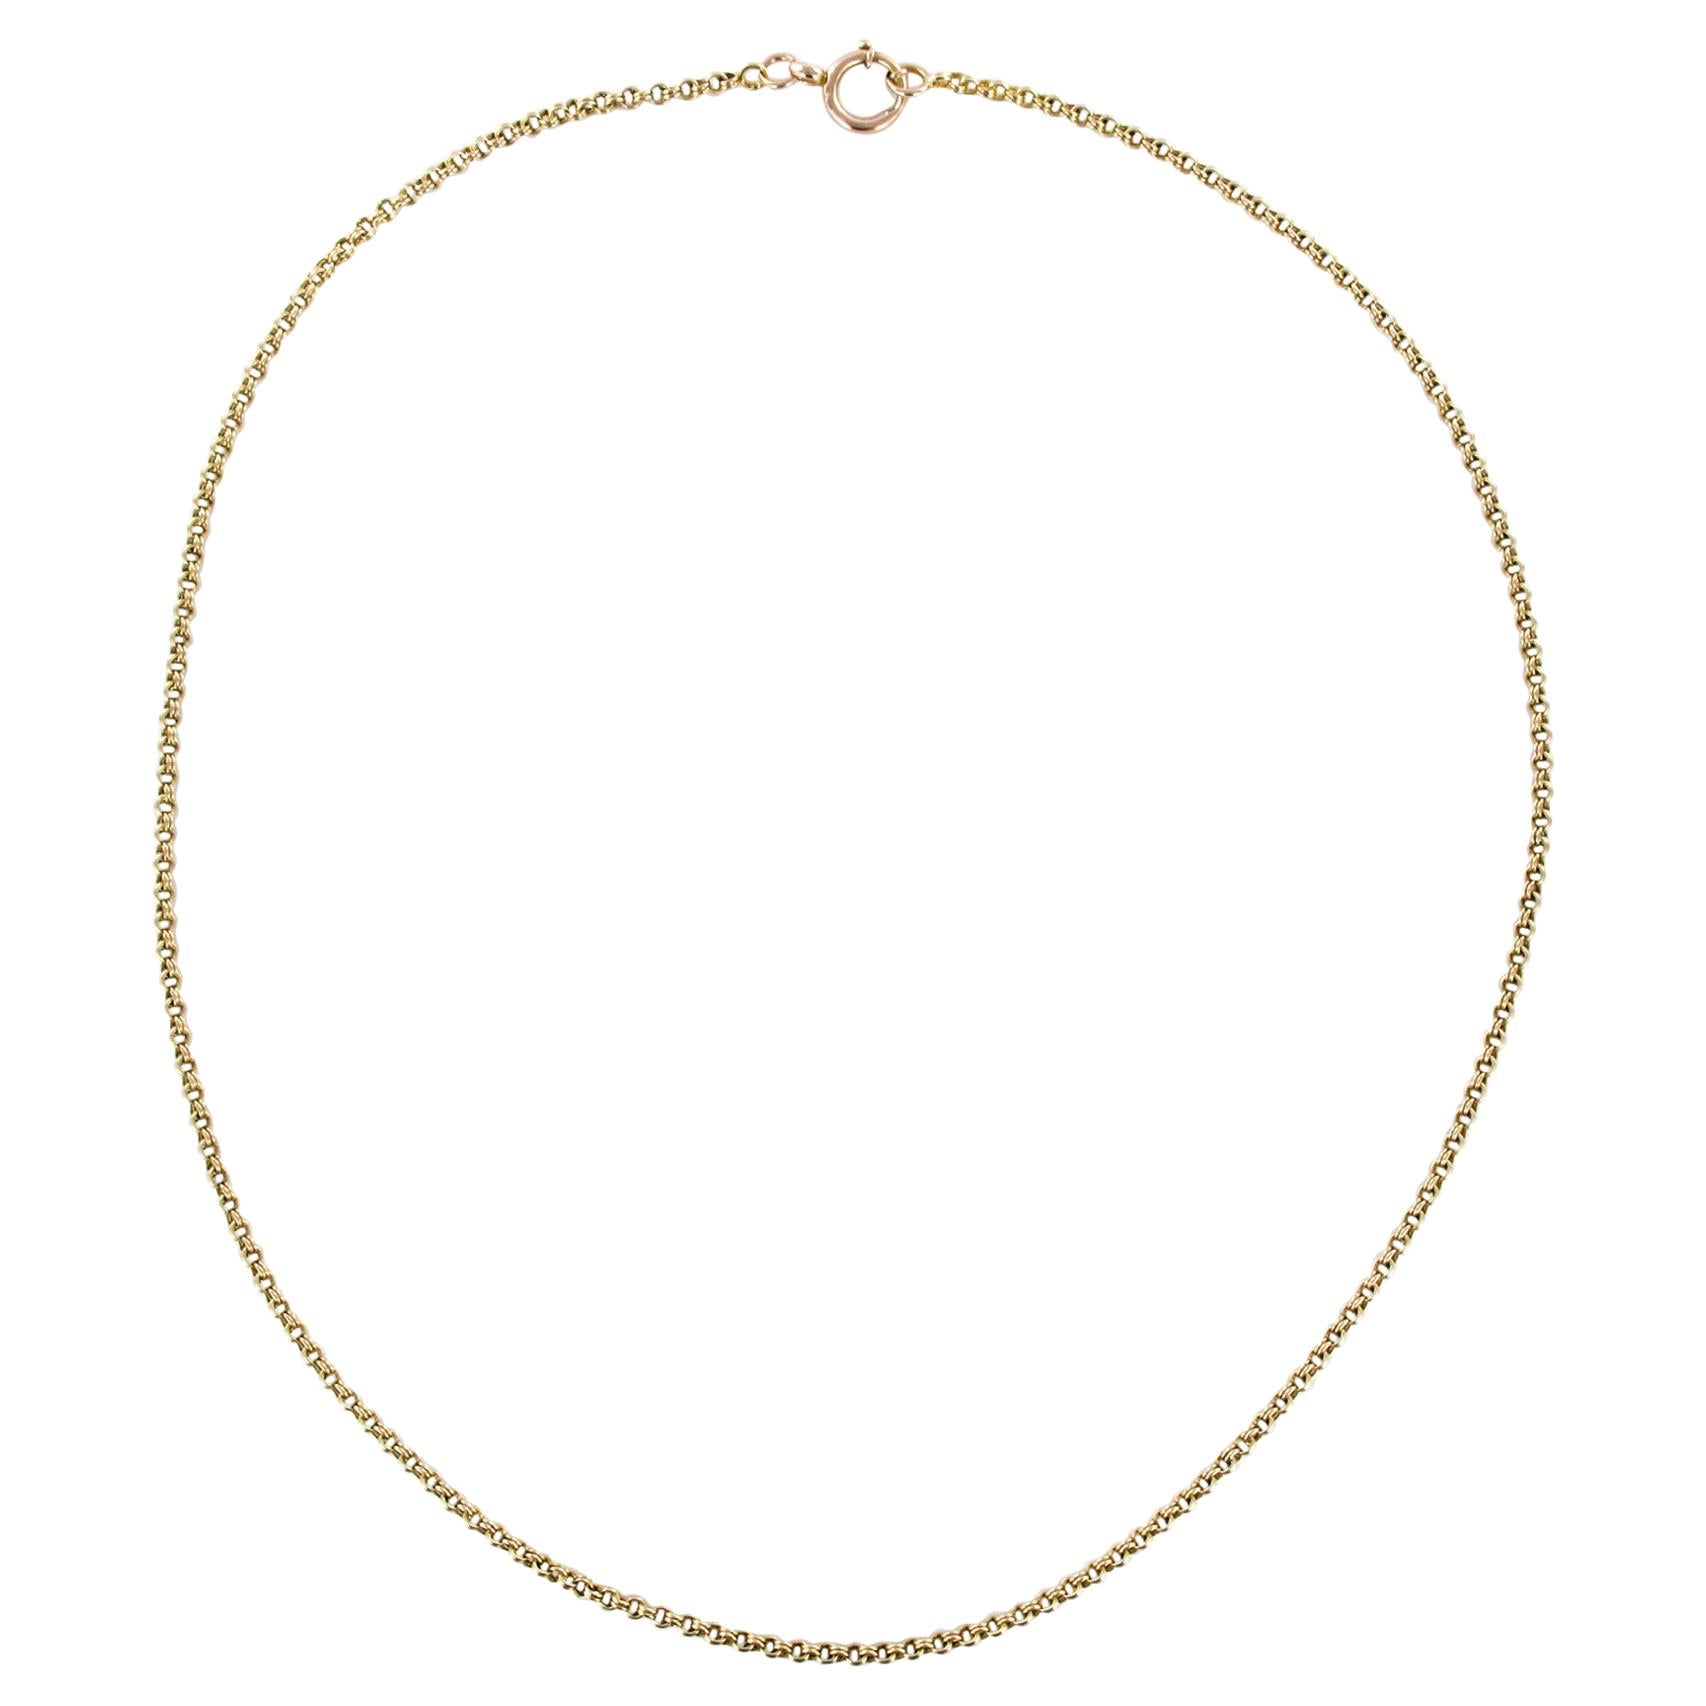 19th Century 18 Karat Yellow Gold Chain Necklace